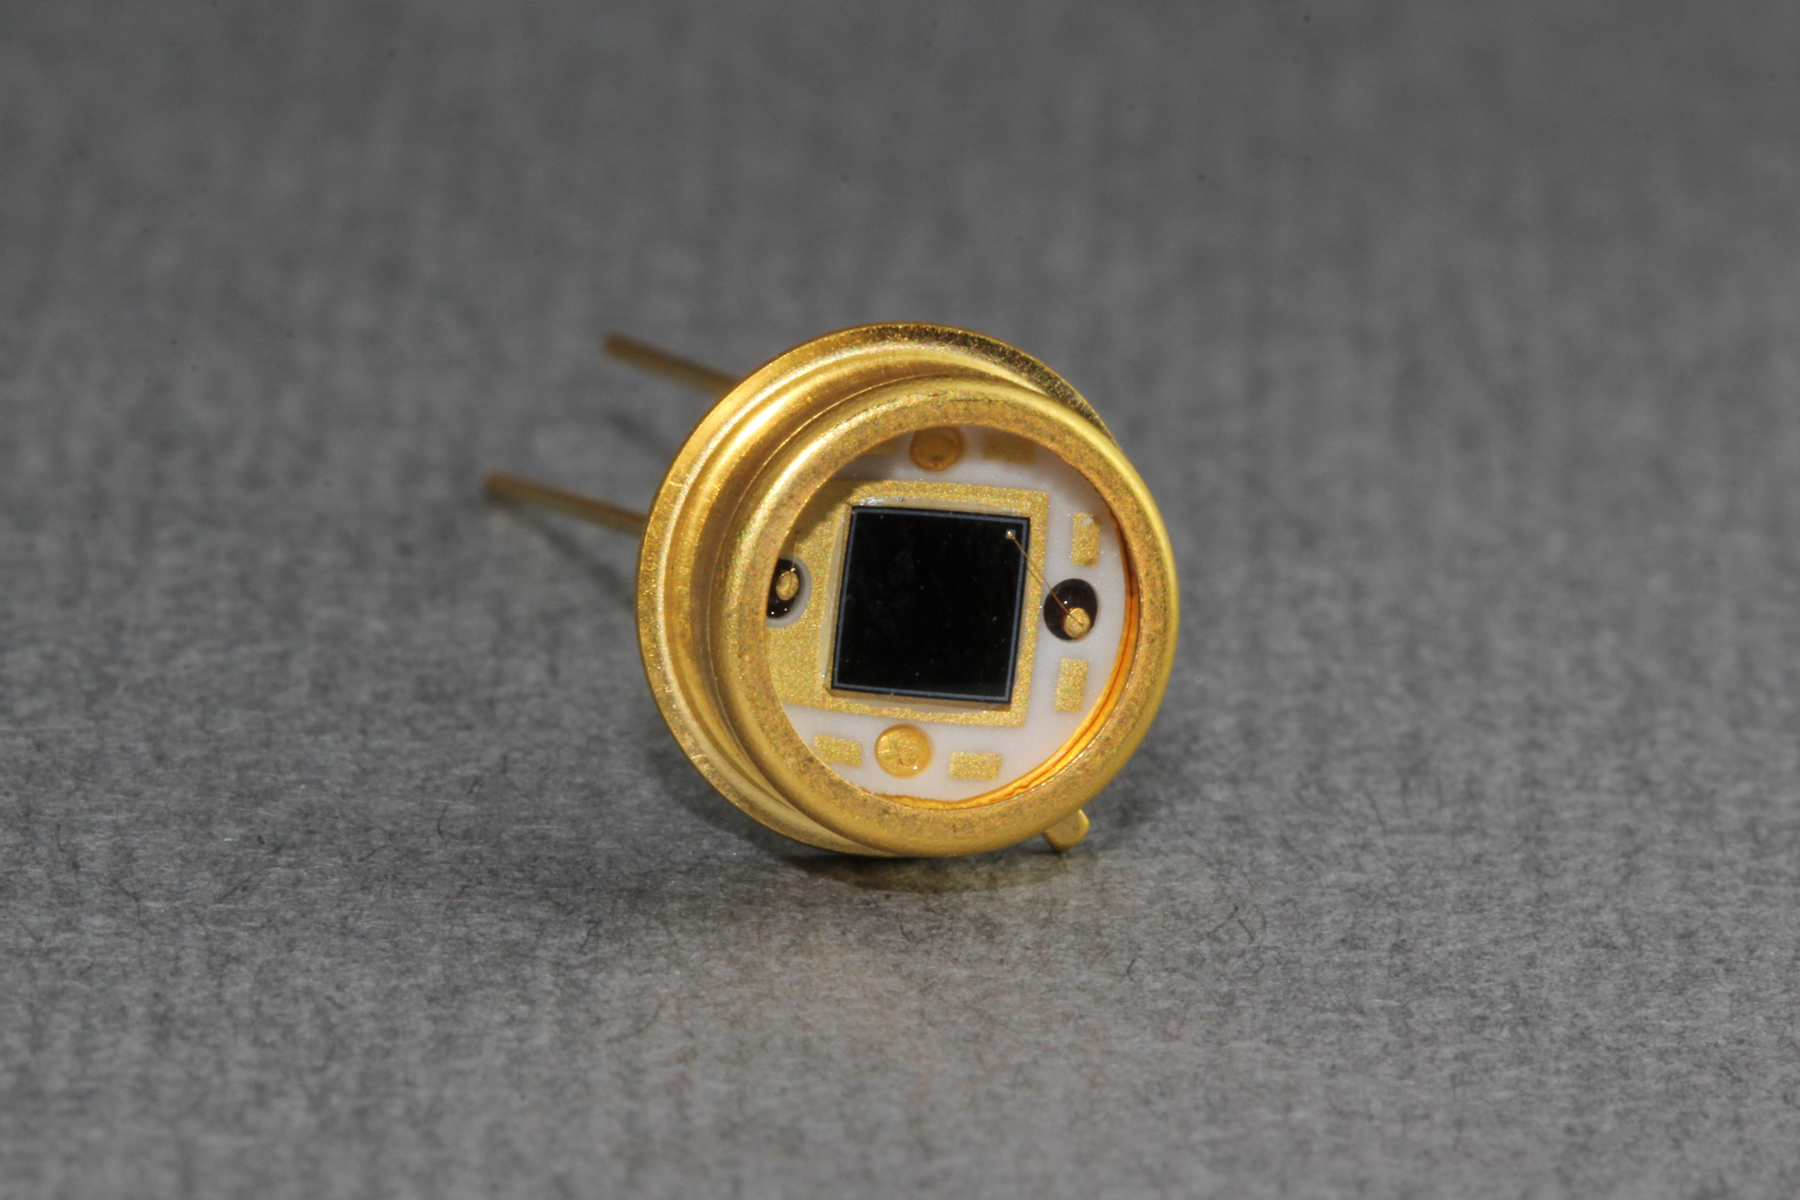 A PIN Photodiode UV-Enhancement Process for High Sensitivity